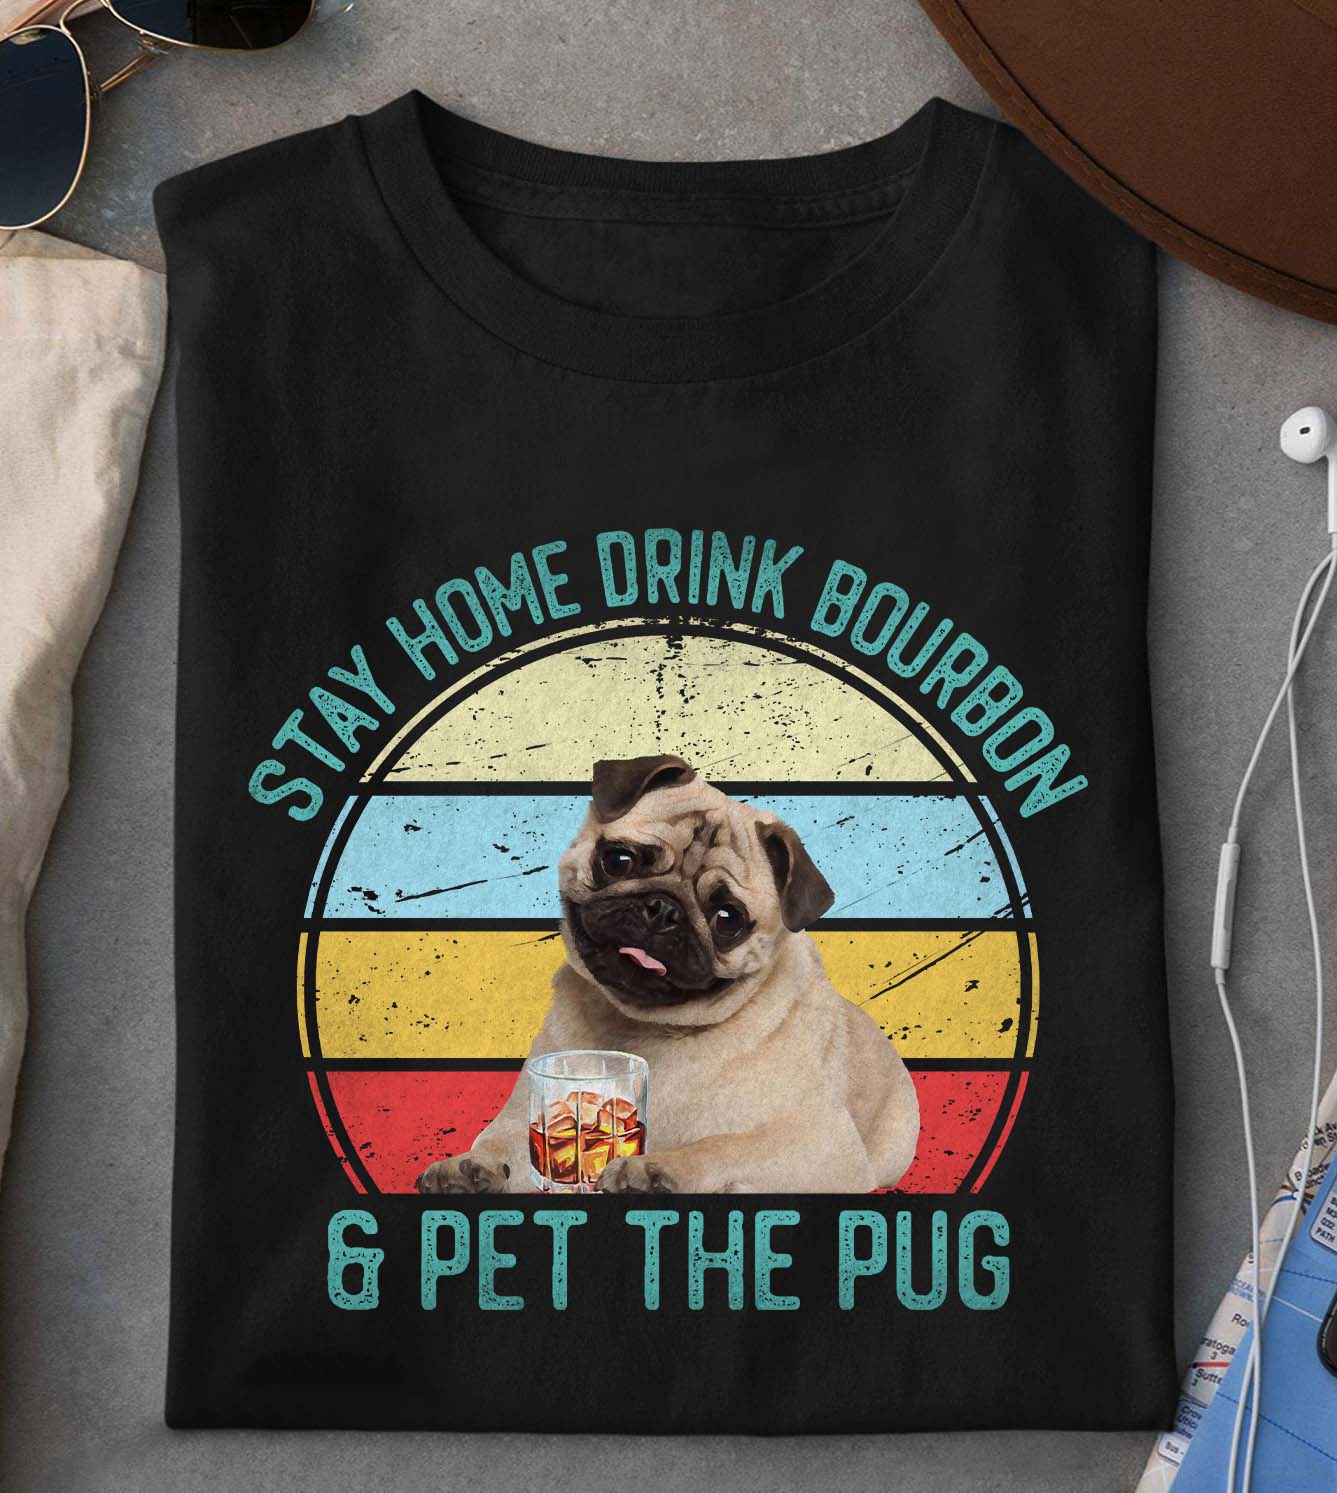 Stay home drink bourbon and pet the pug - Pug dog and bourbon